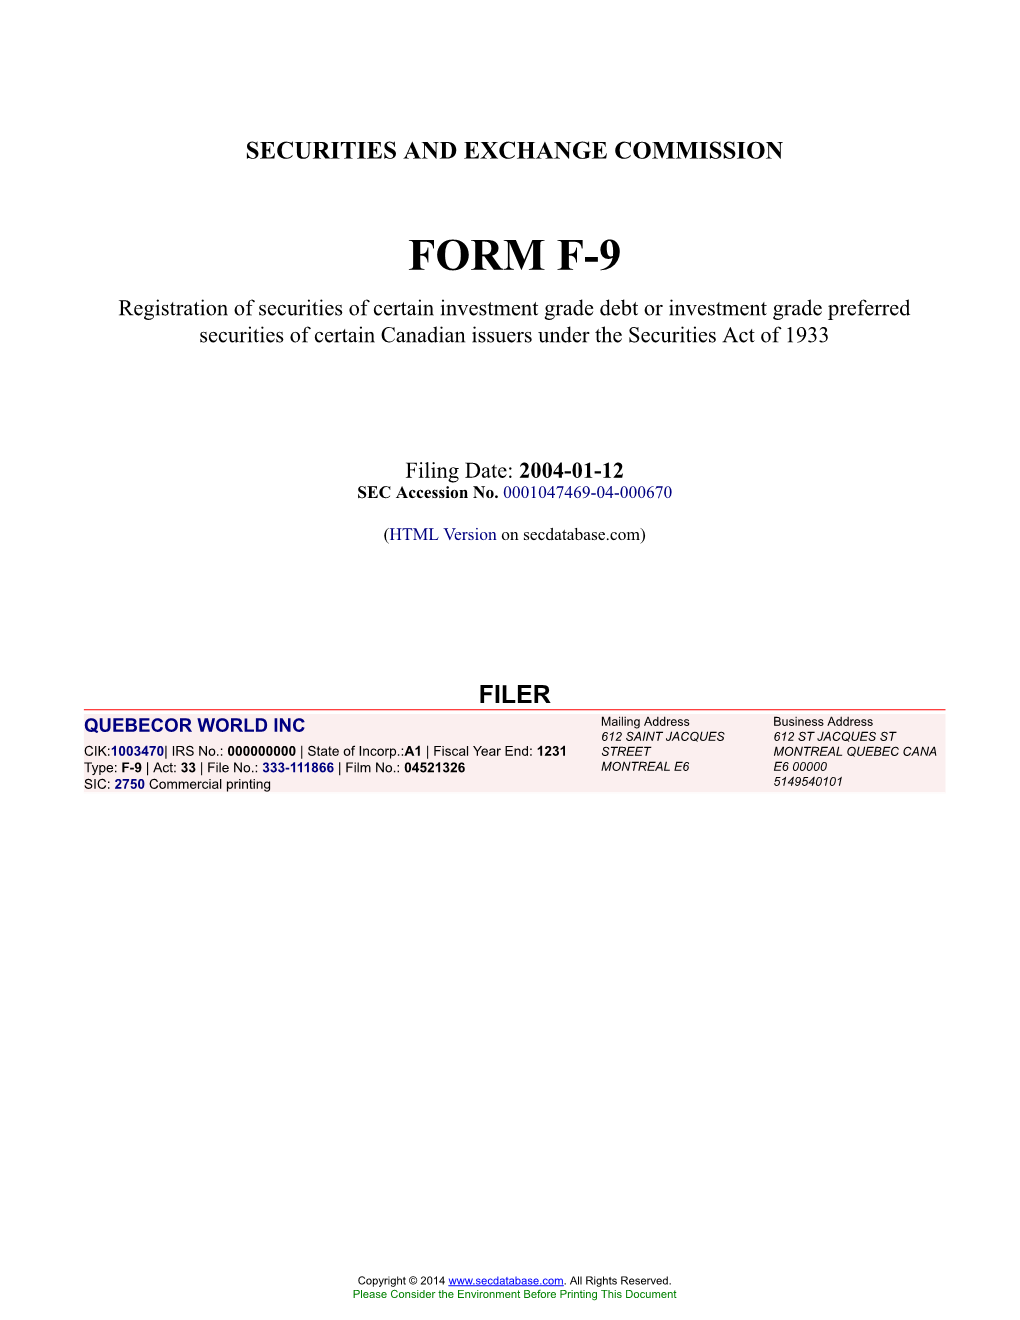 QUEBECOR WORLD INC Form F-9 Filed 2004-01-12